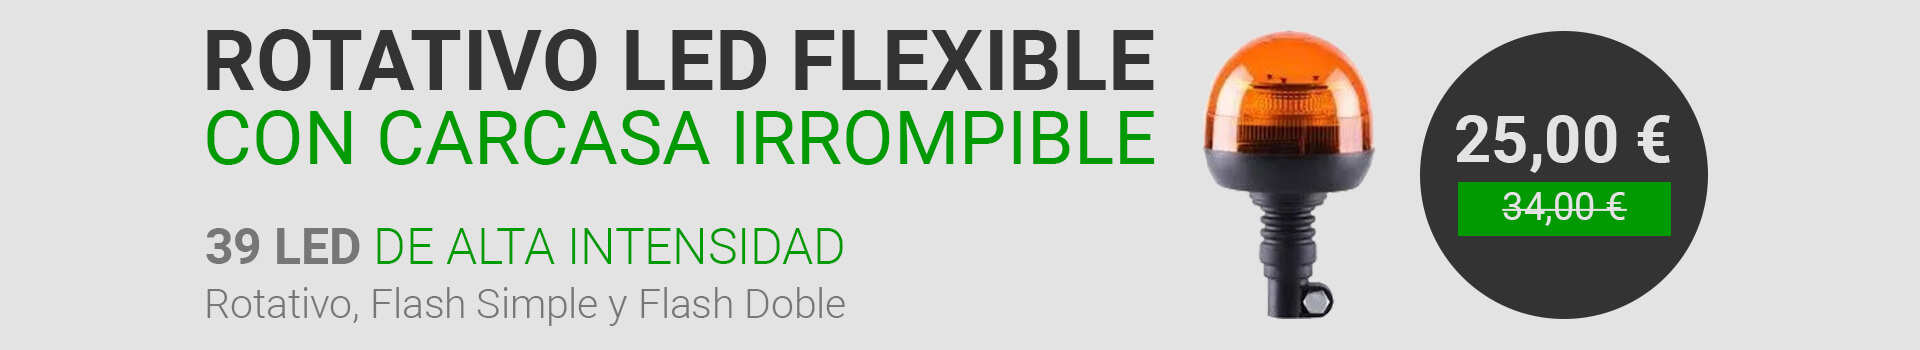 Oferta Rotativo led flexible con carcasa irrompible